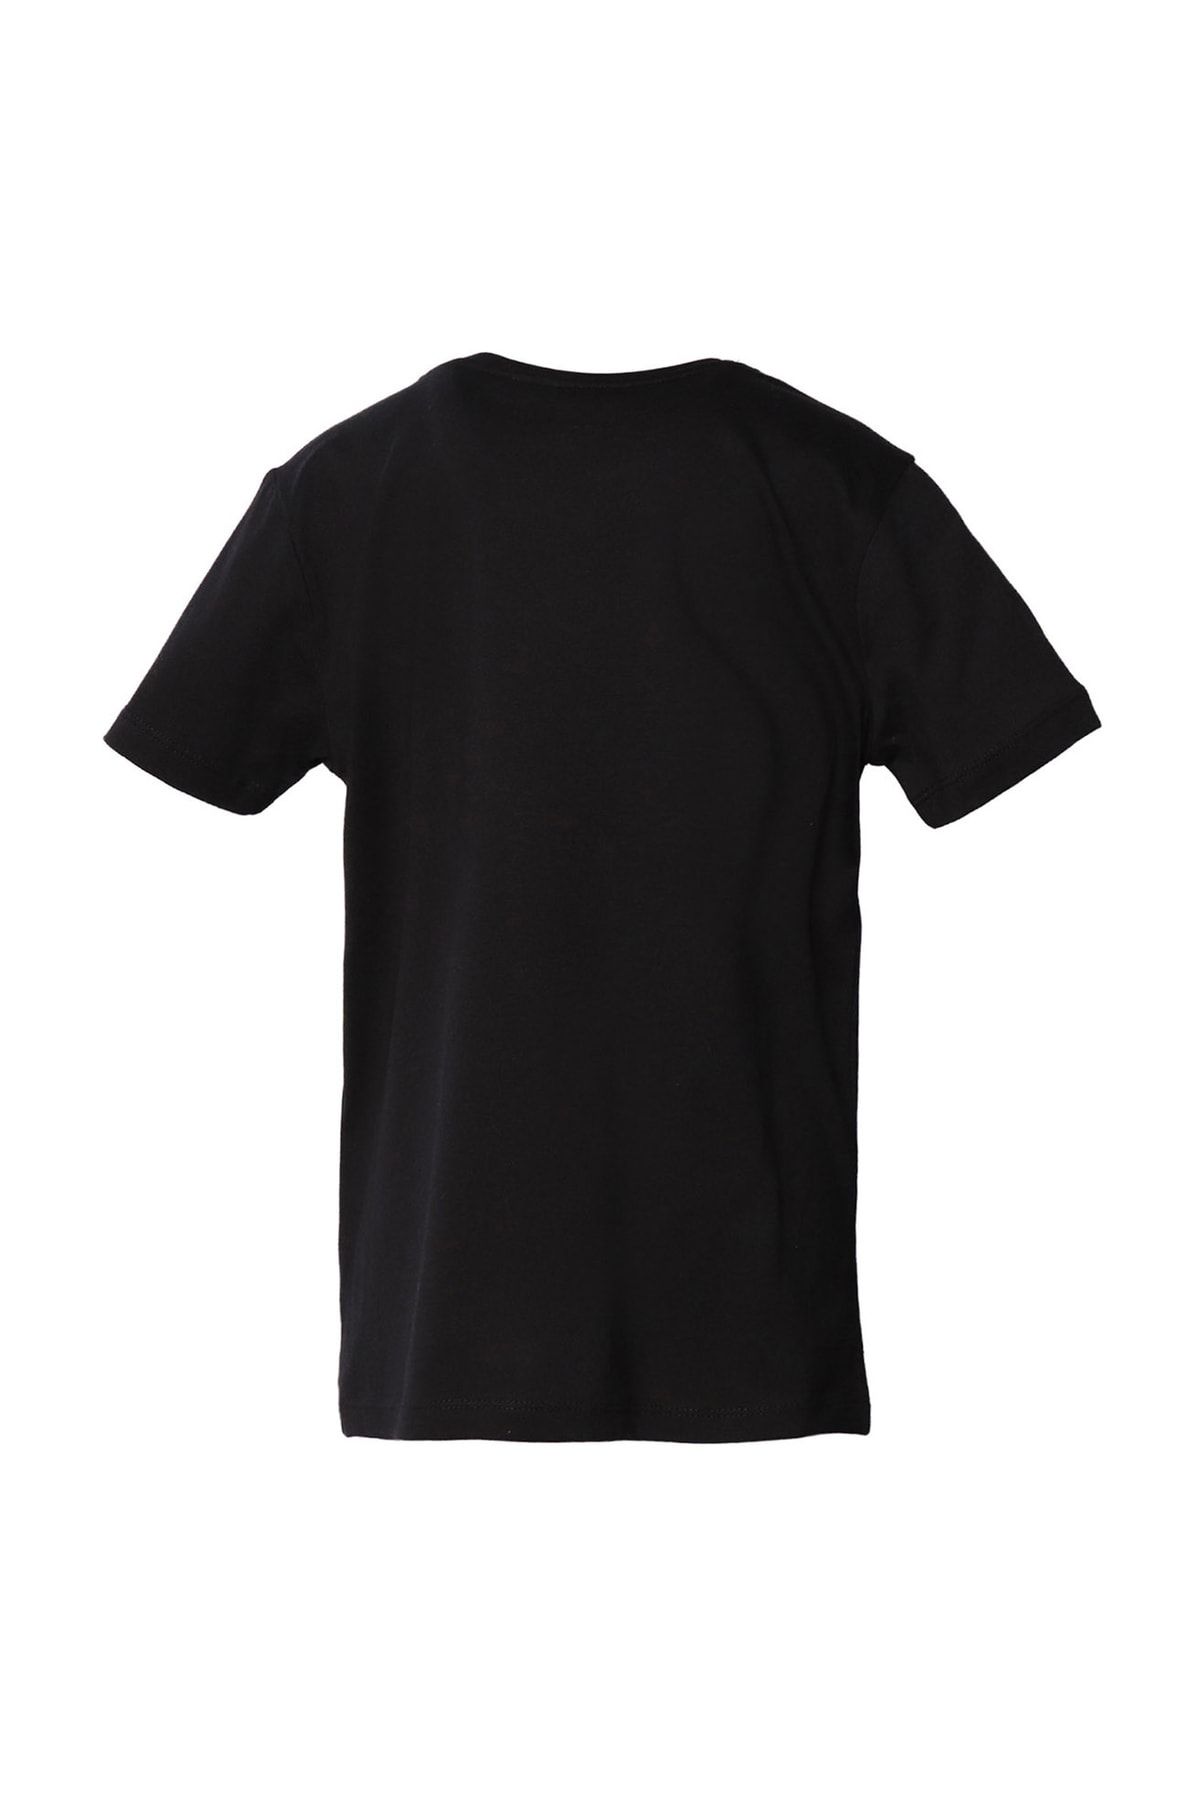 hummel تی شرت مرد سیاه چاپ شده 911580-2001 HMLGORM S/S